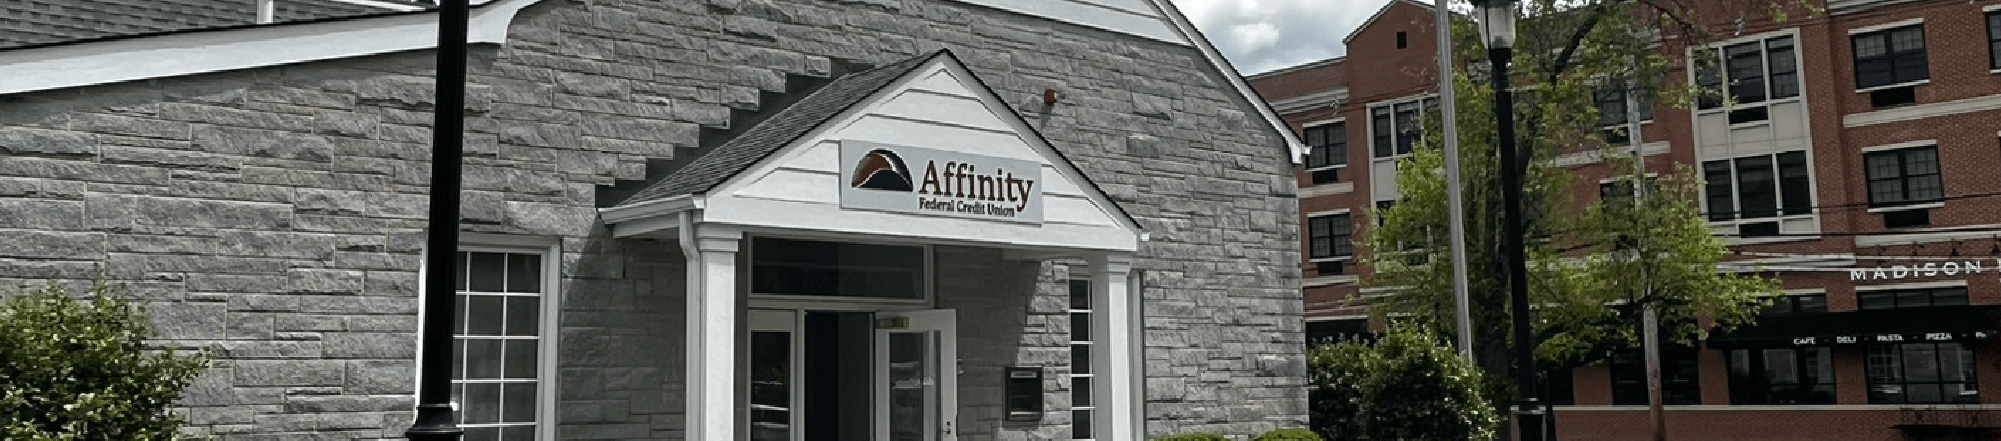 Affinity FCU Madison Branch